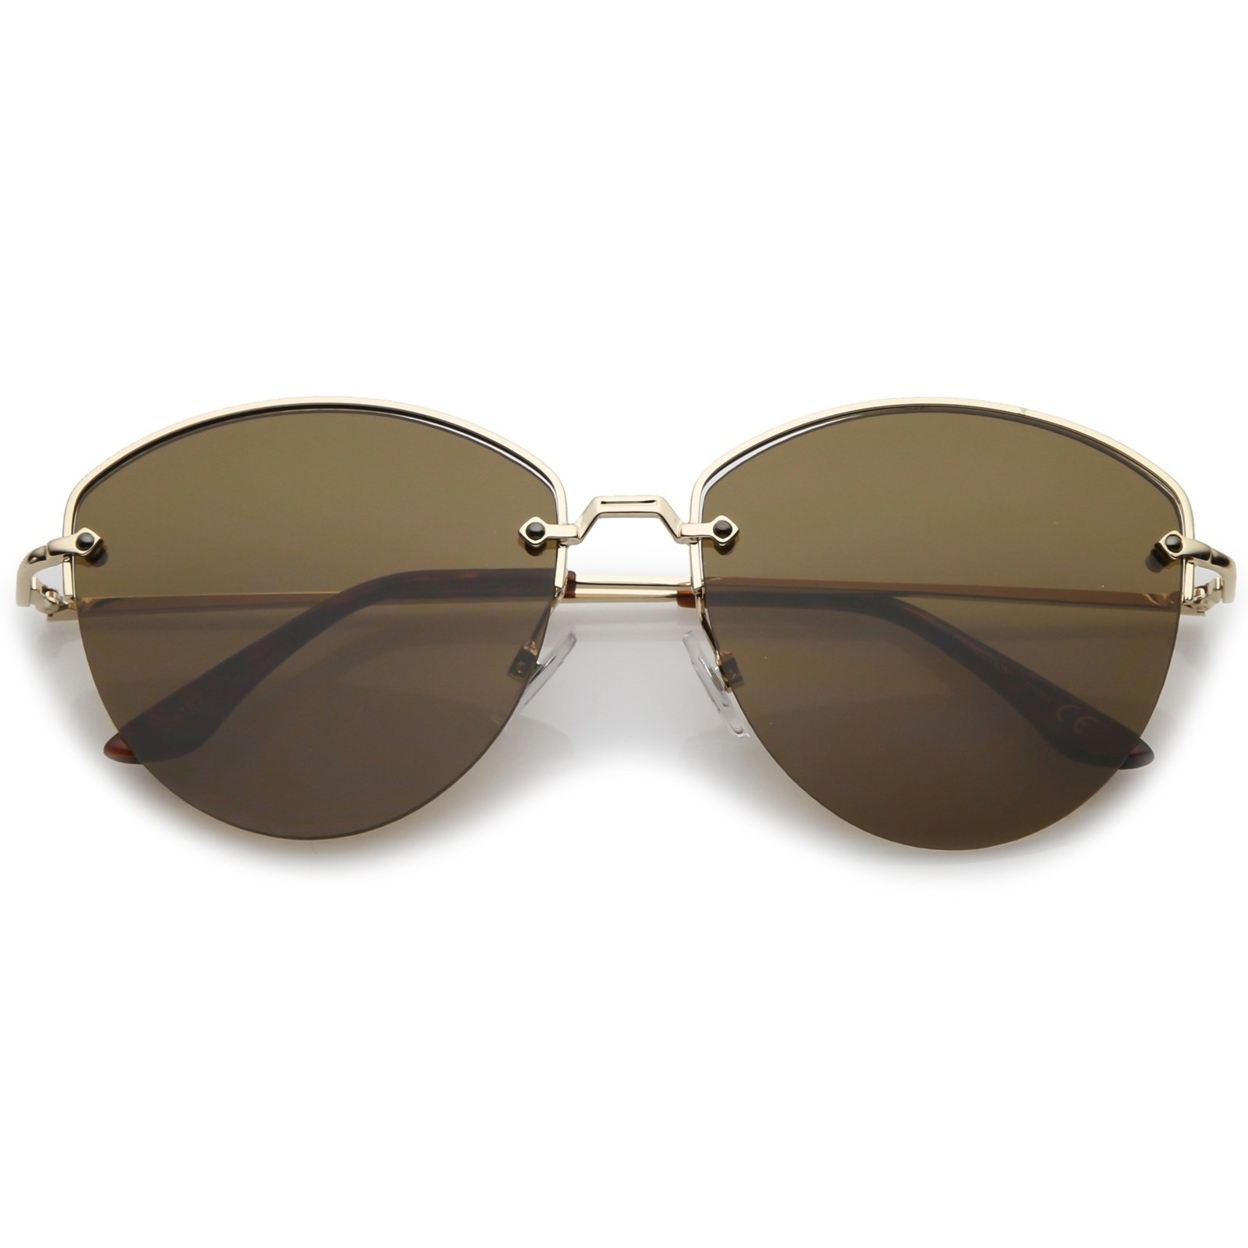 Modern Metal Nose Bridge Flat Lens Semi-Rimless Sunglasses 60mm - Gold / Smoke